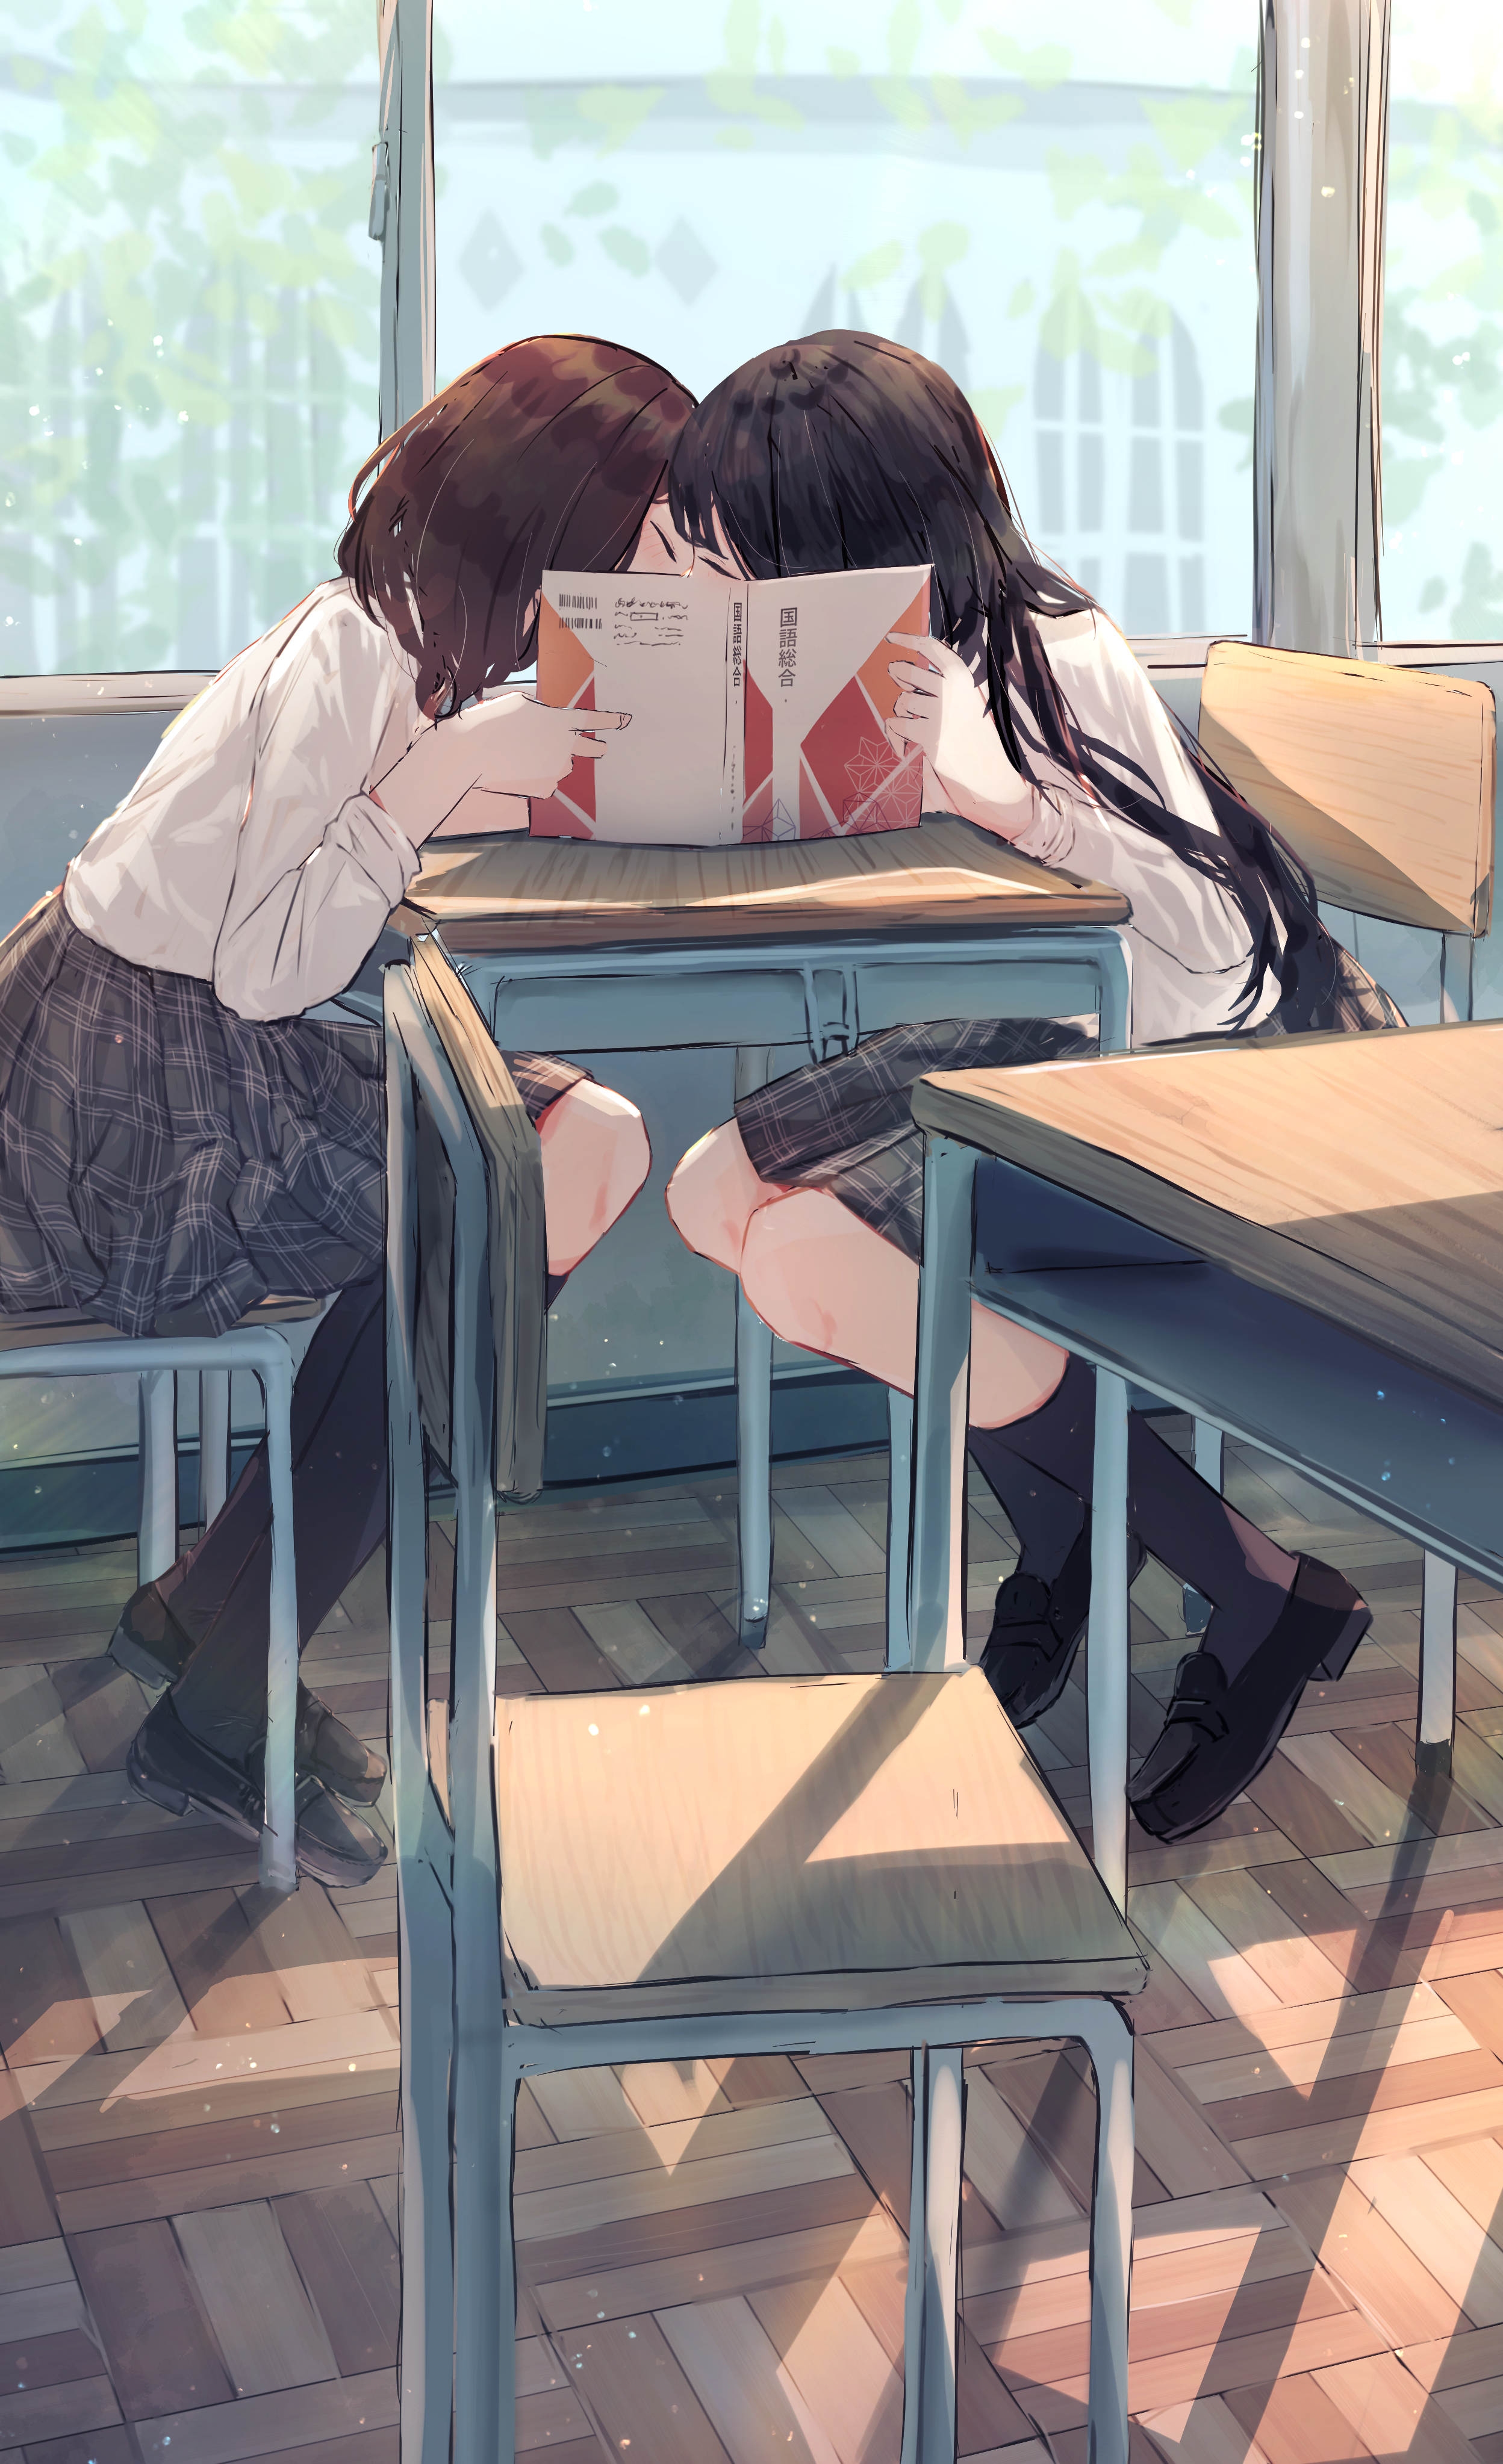 Anime 2496x4093 anime anime girls schoolgirl school uniform classroom kissing strategic covering yuri lesbians